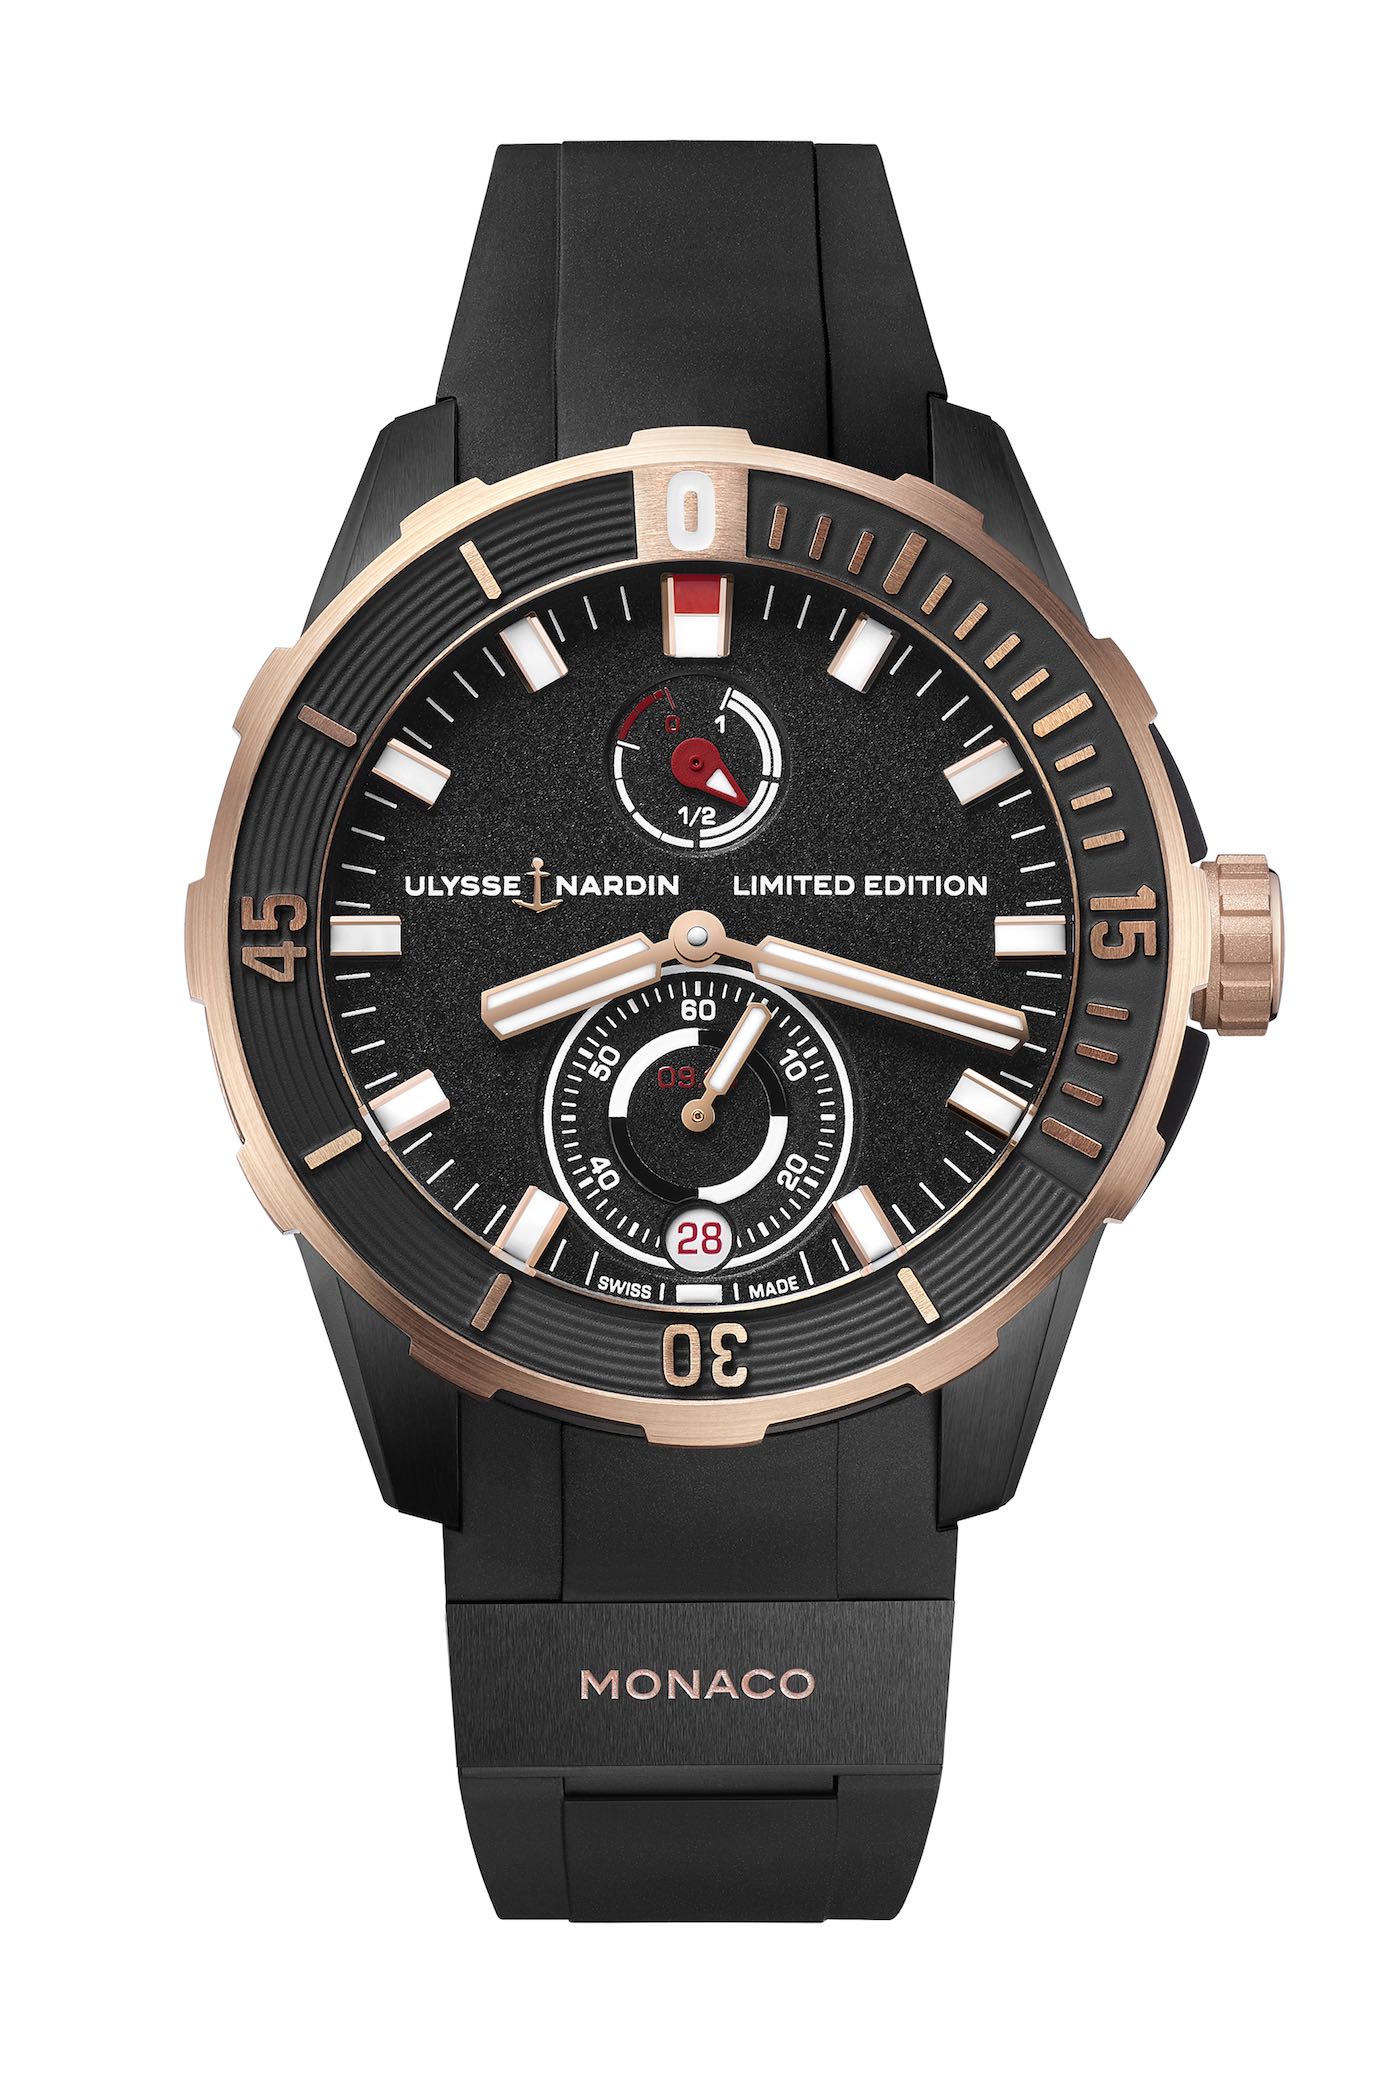 2018 Ulysse Nardin Diver Chronometer Monaco Limited Edition